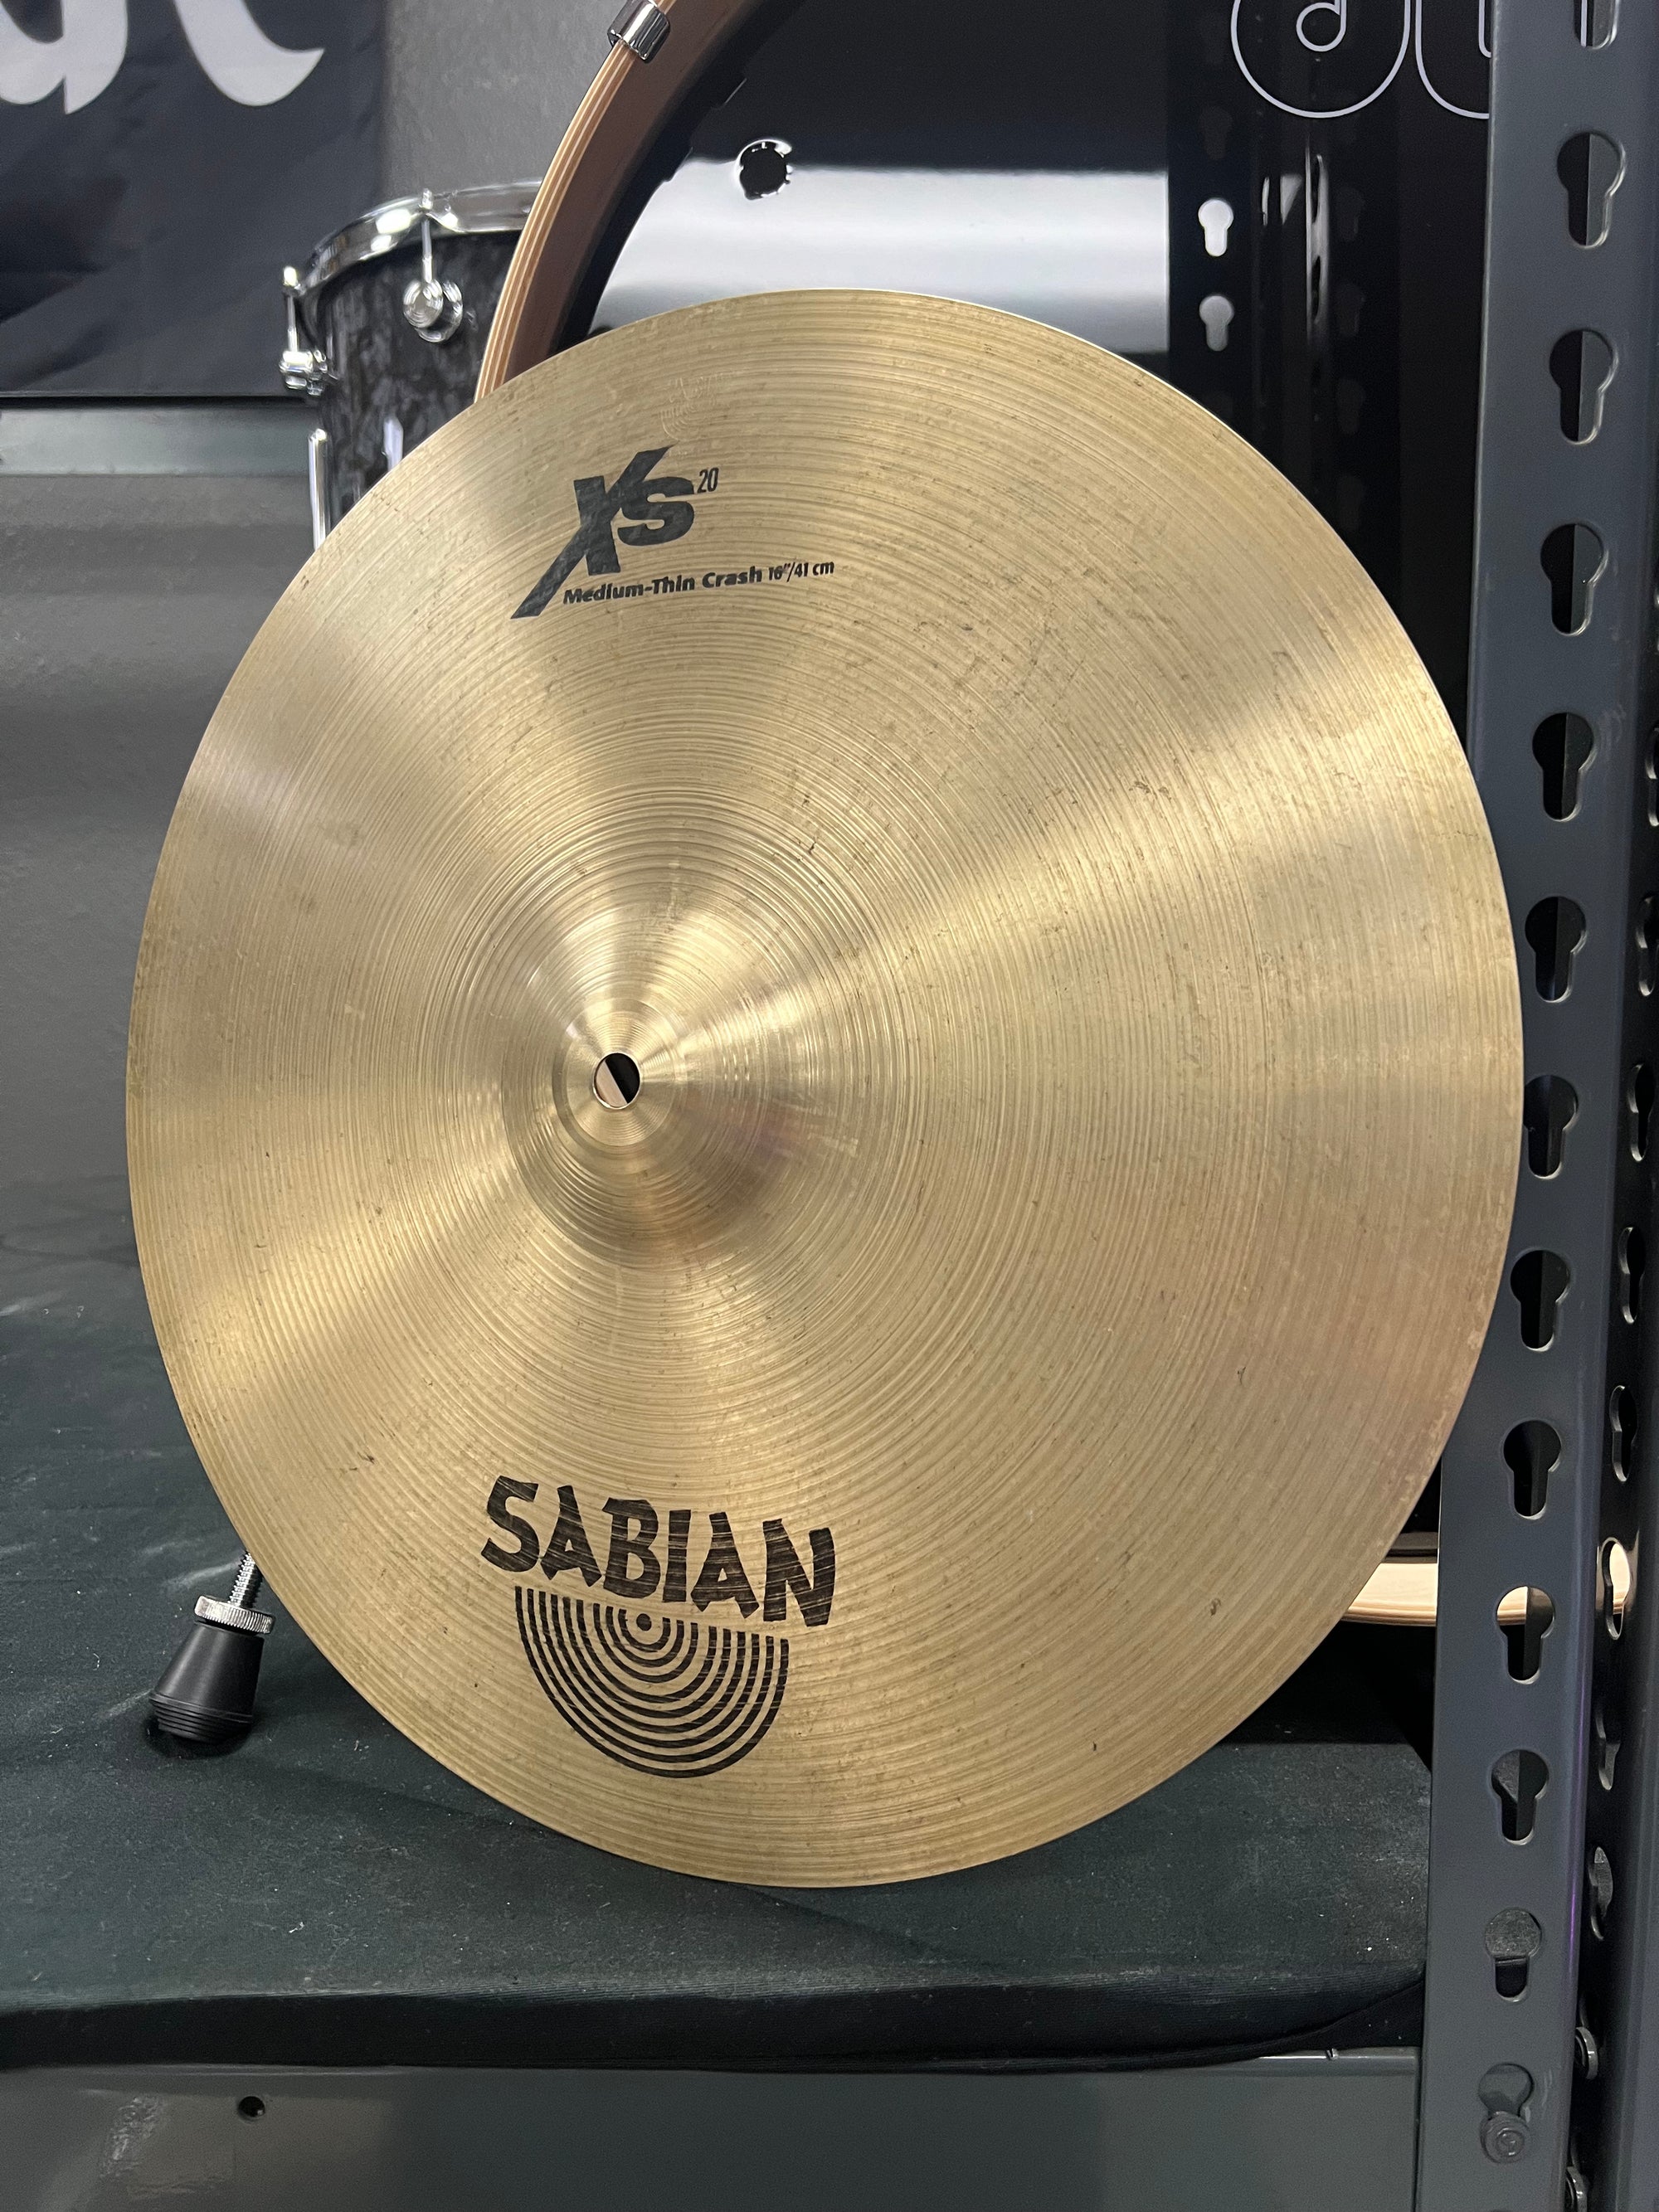 Sabian 16” XS20 Medium thin crash cymbal